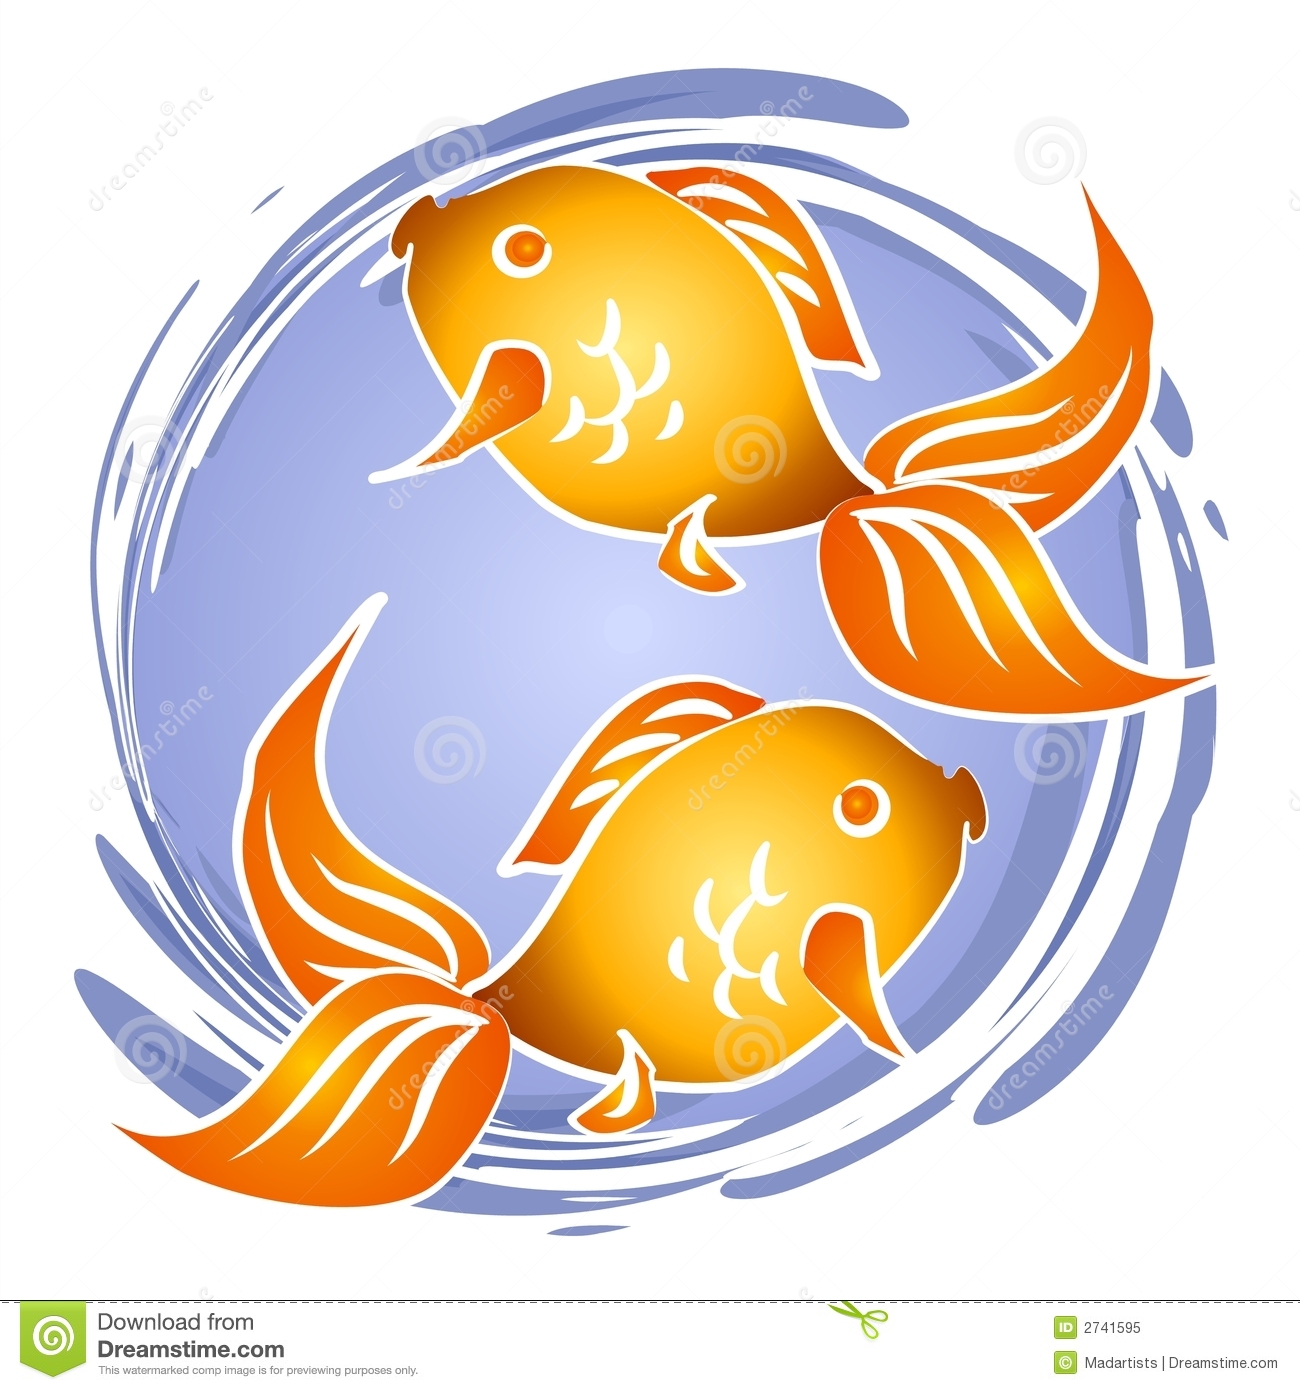 Goldfish Fish Bowl Clip Art Royalty Free Stock Photo   Image  2741595